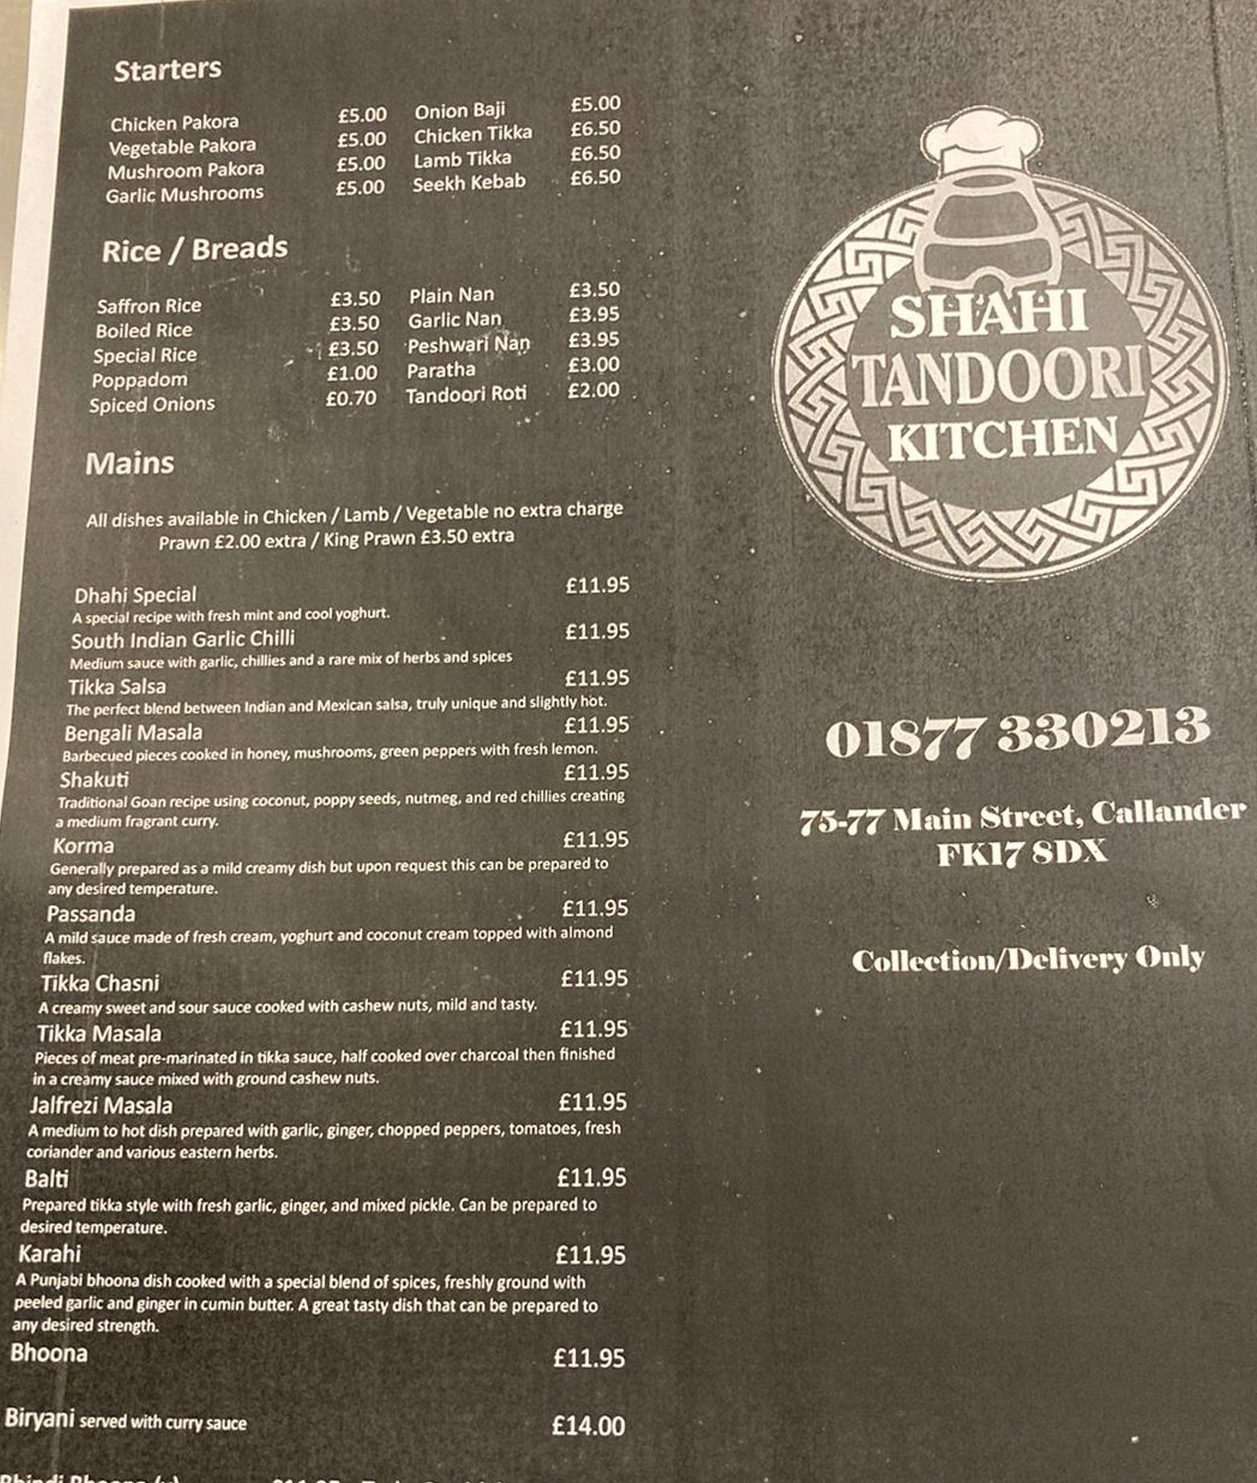 Shahi Tandoori Kitchen menu at Frying Dutchman in Callander. 